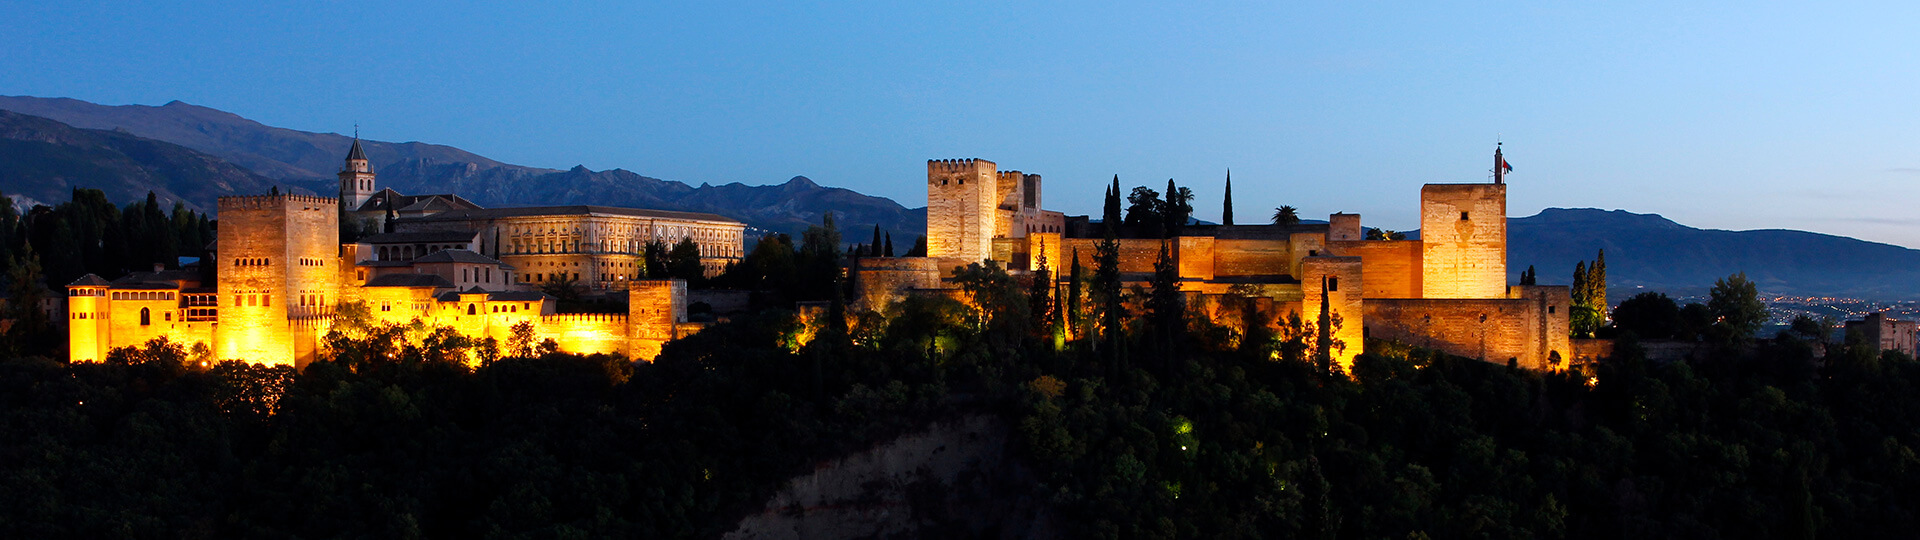 Vista panorámica de la Alhambra de Granada de noche